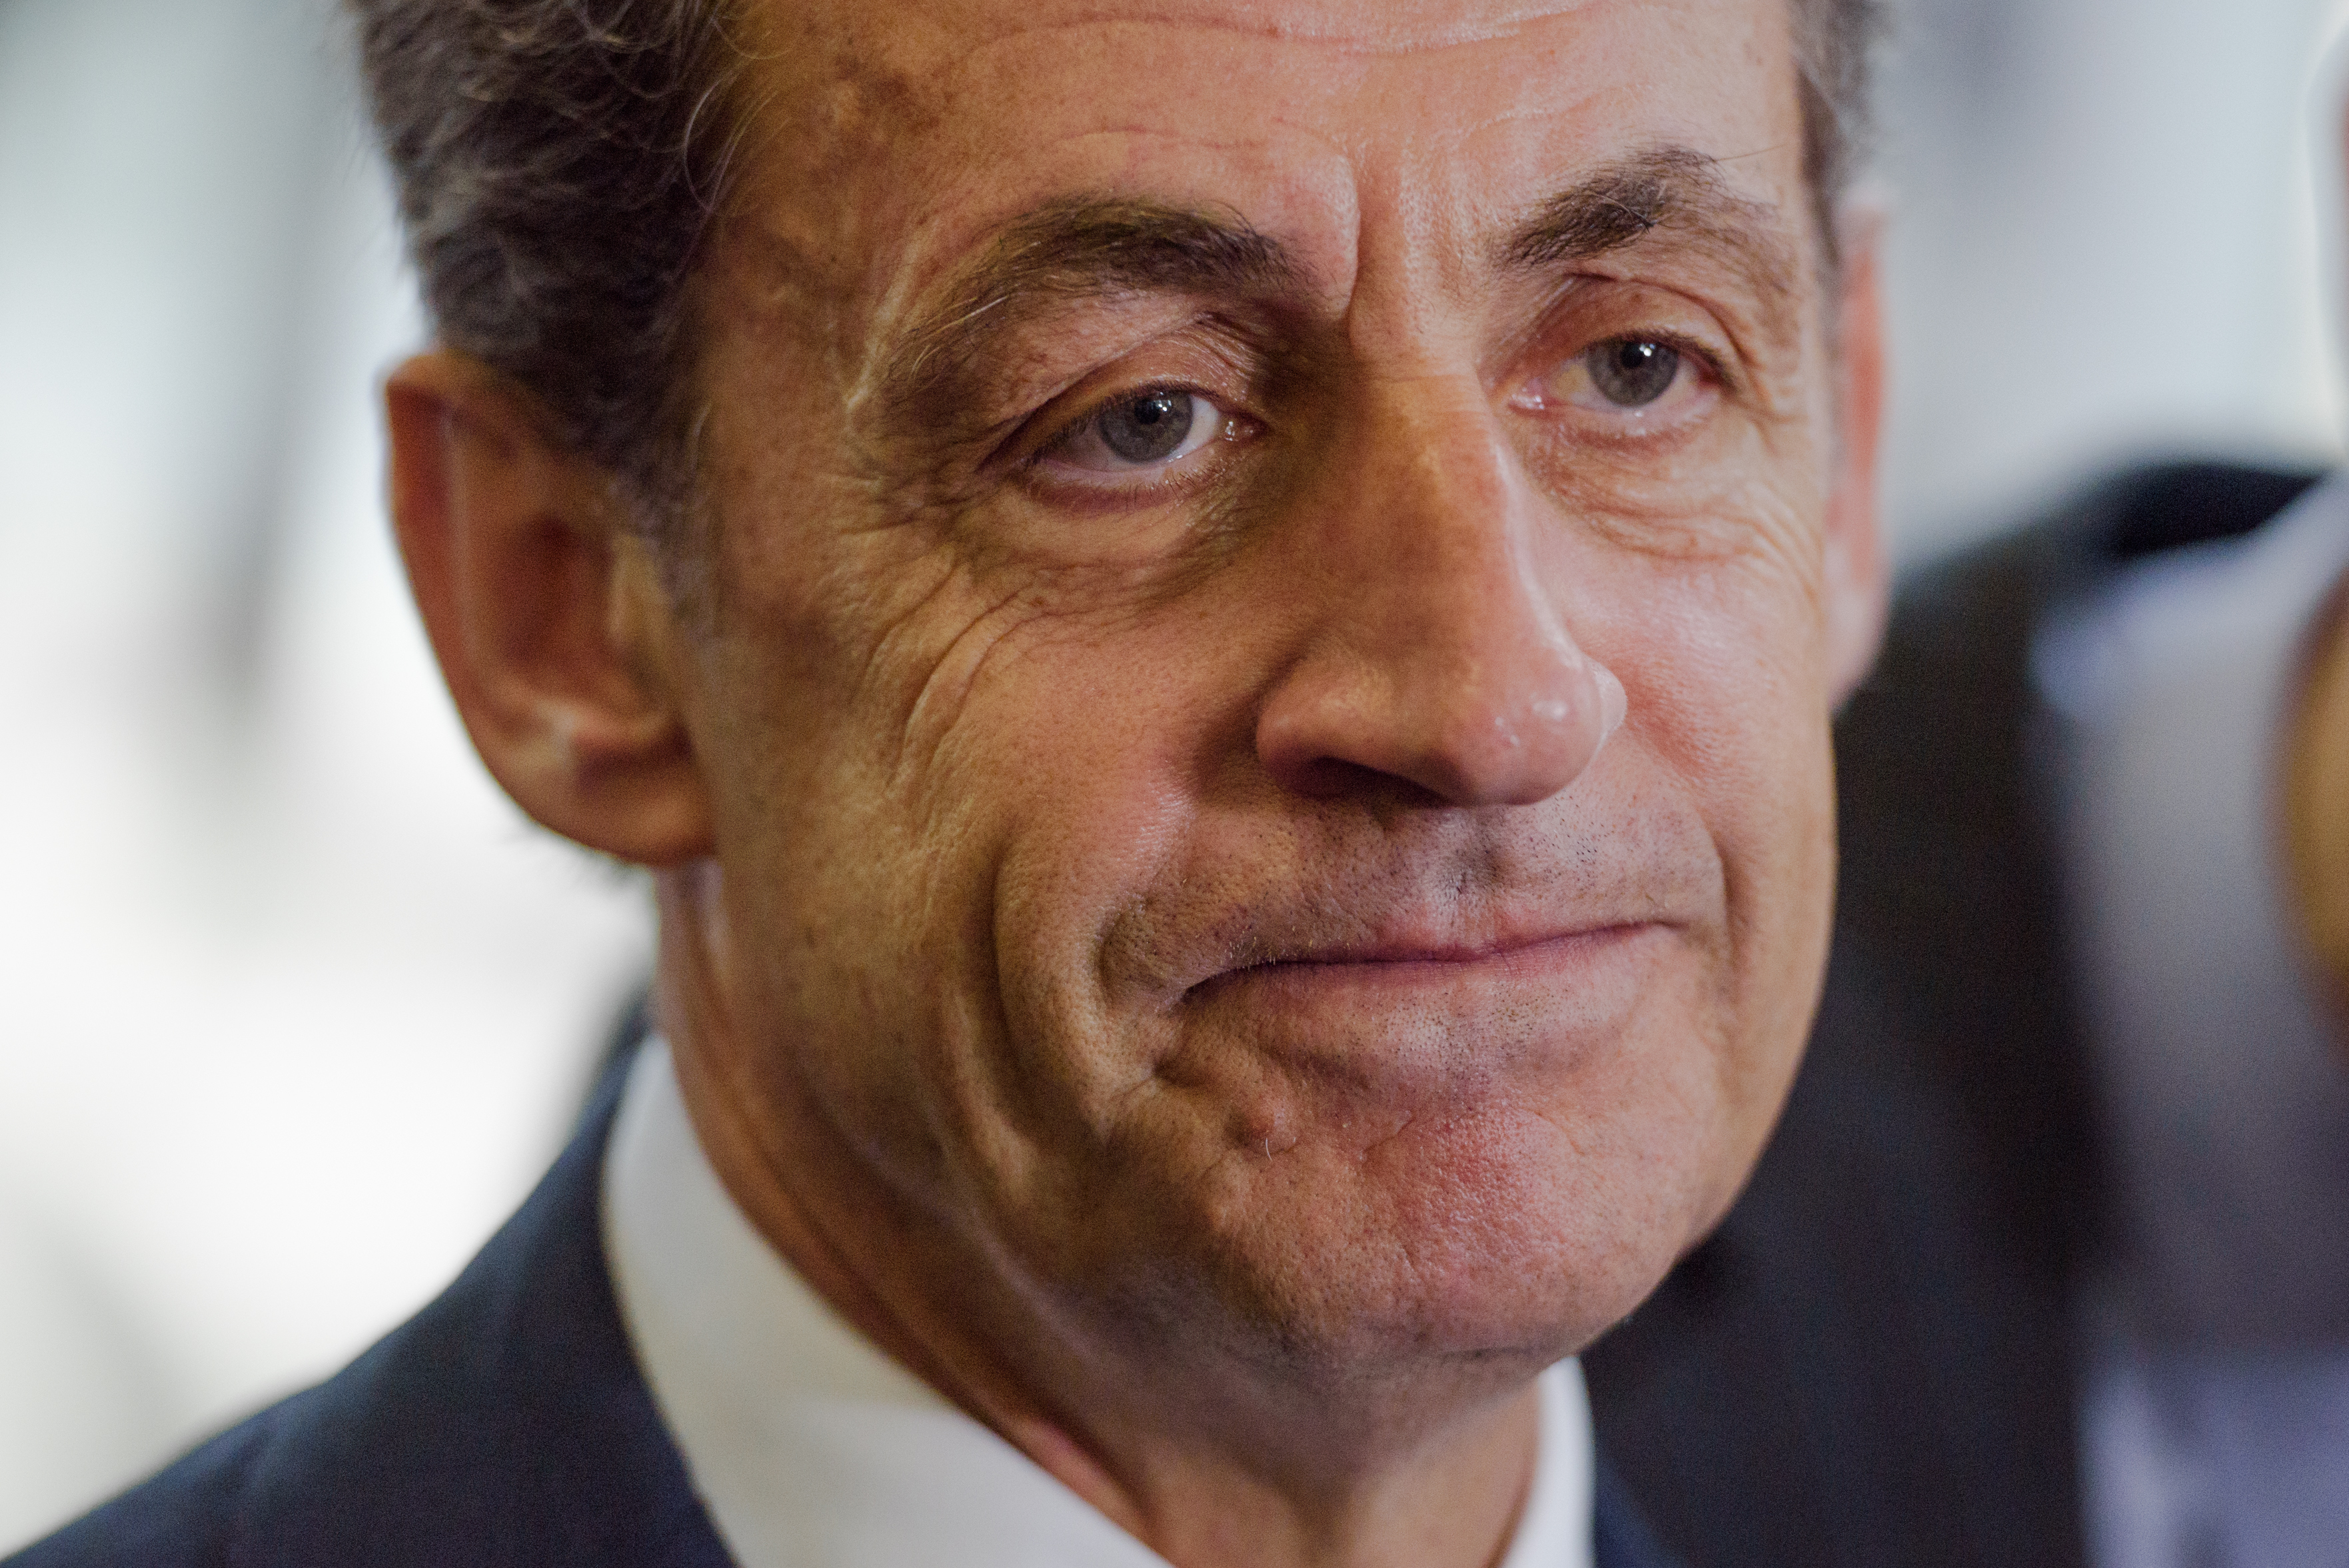     Nicolas Sarkozy condamné à un an de prison ferme

